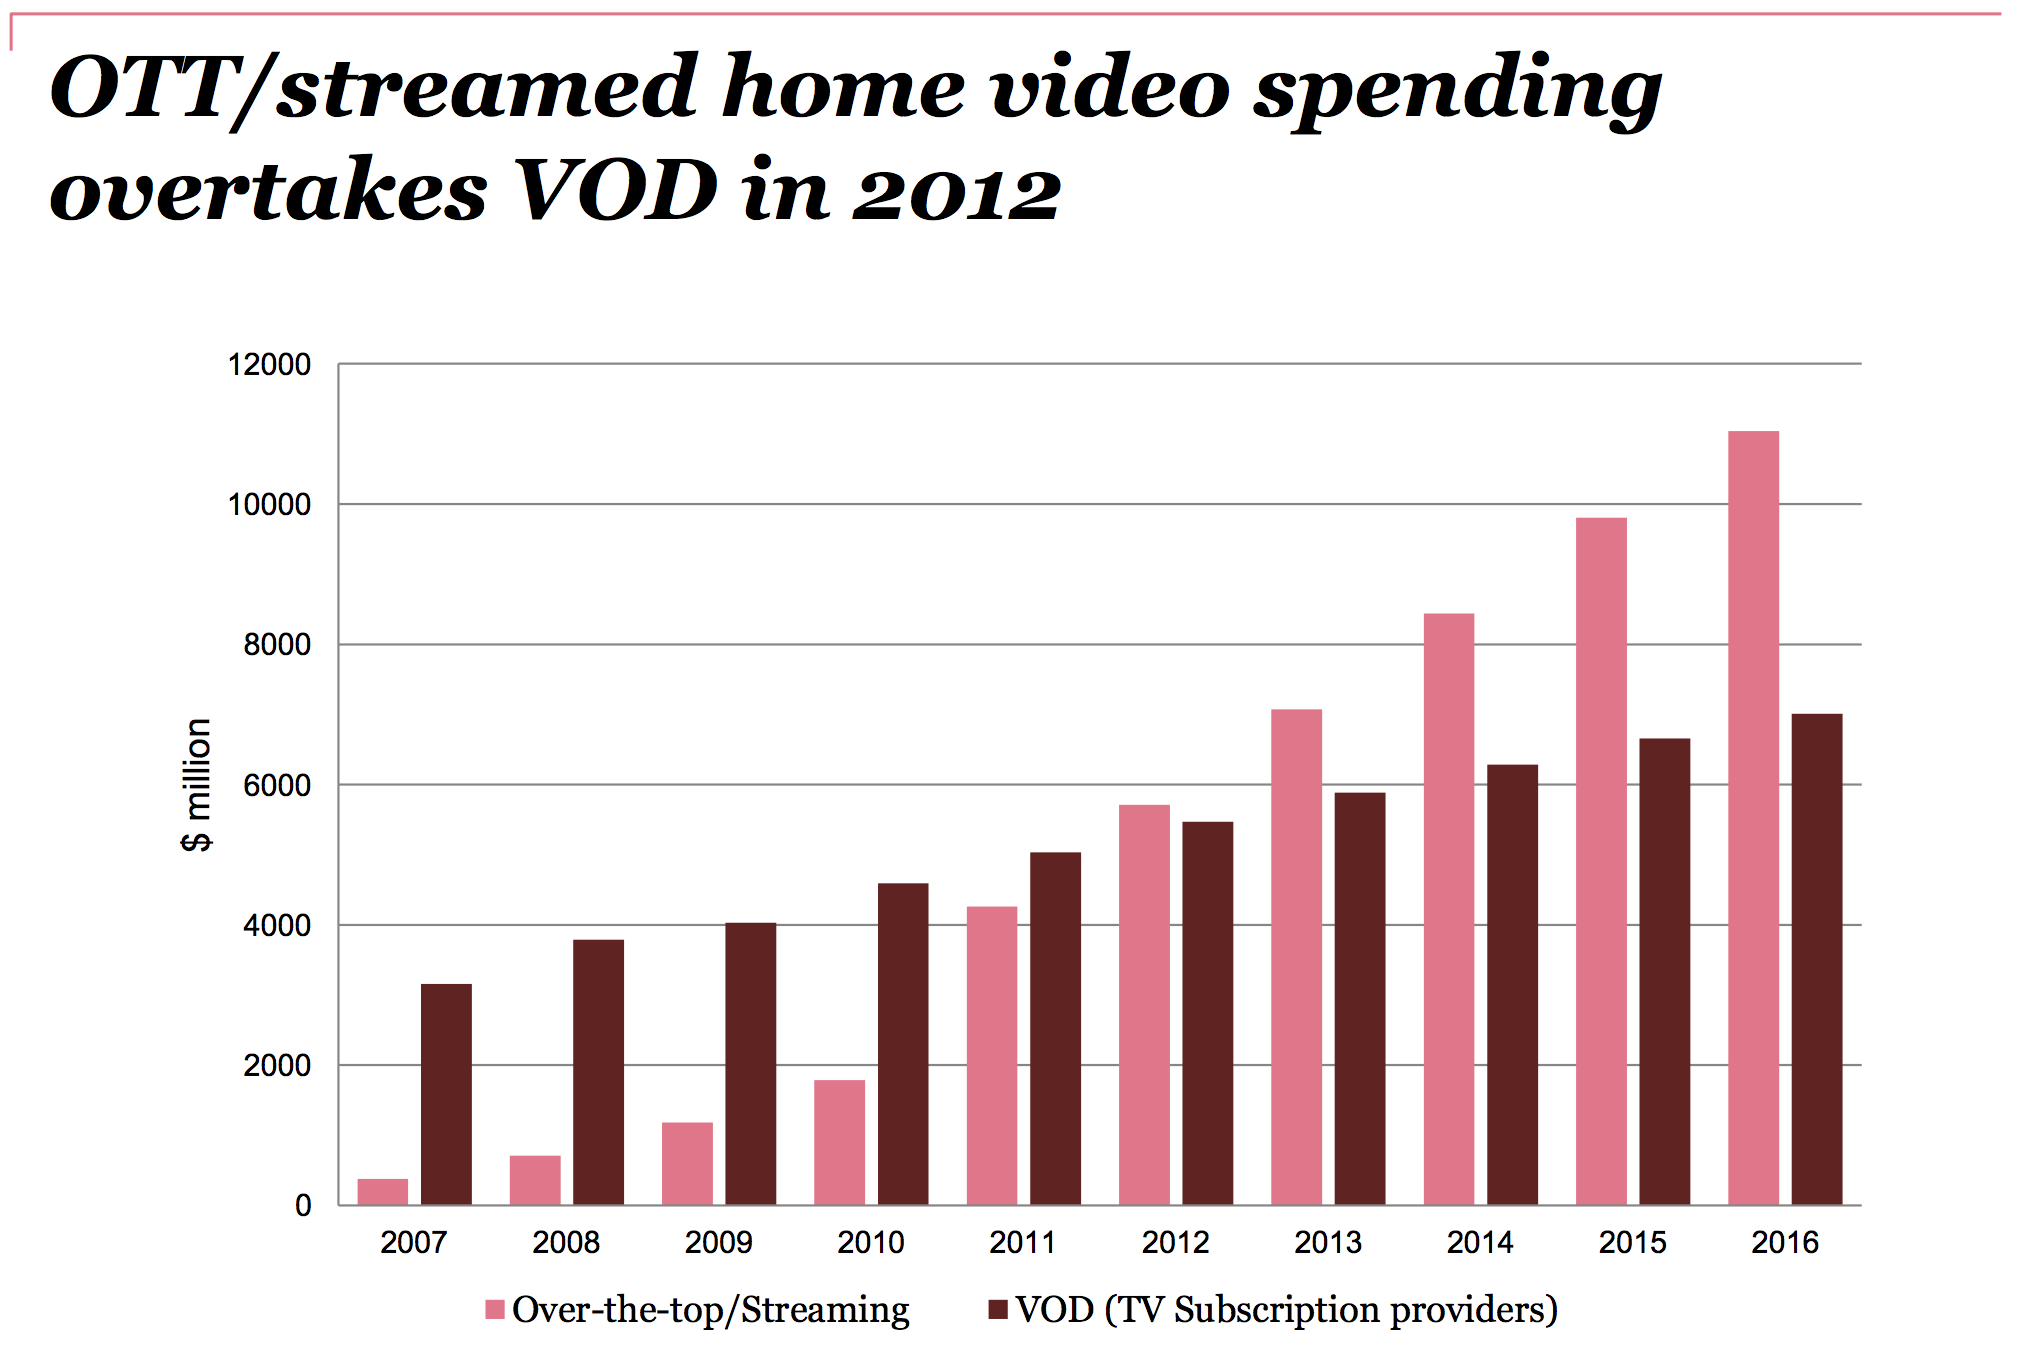 PwC. Media outlook 2016. OTT/streamed home video spending overtakes VOD in 2012.